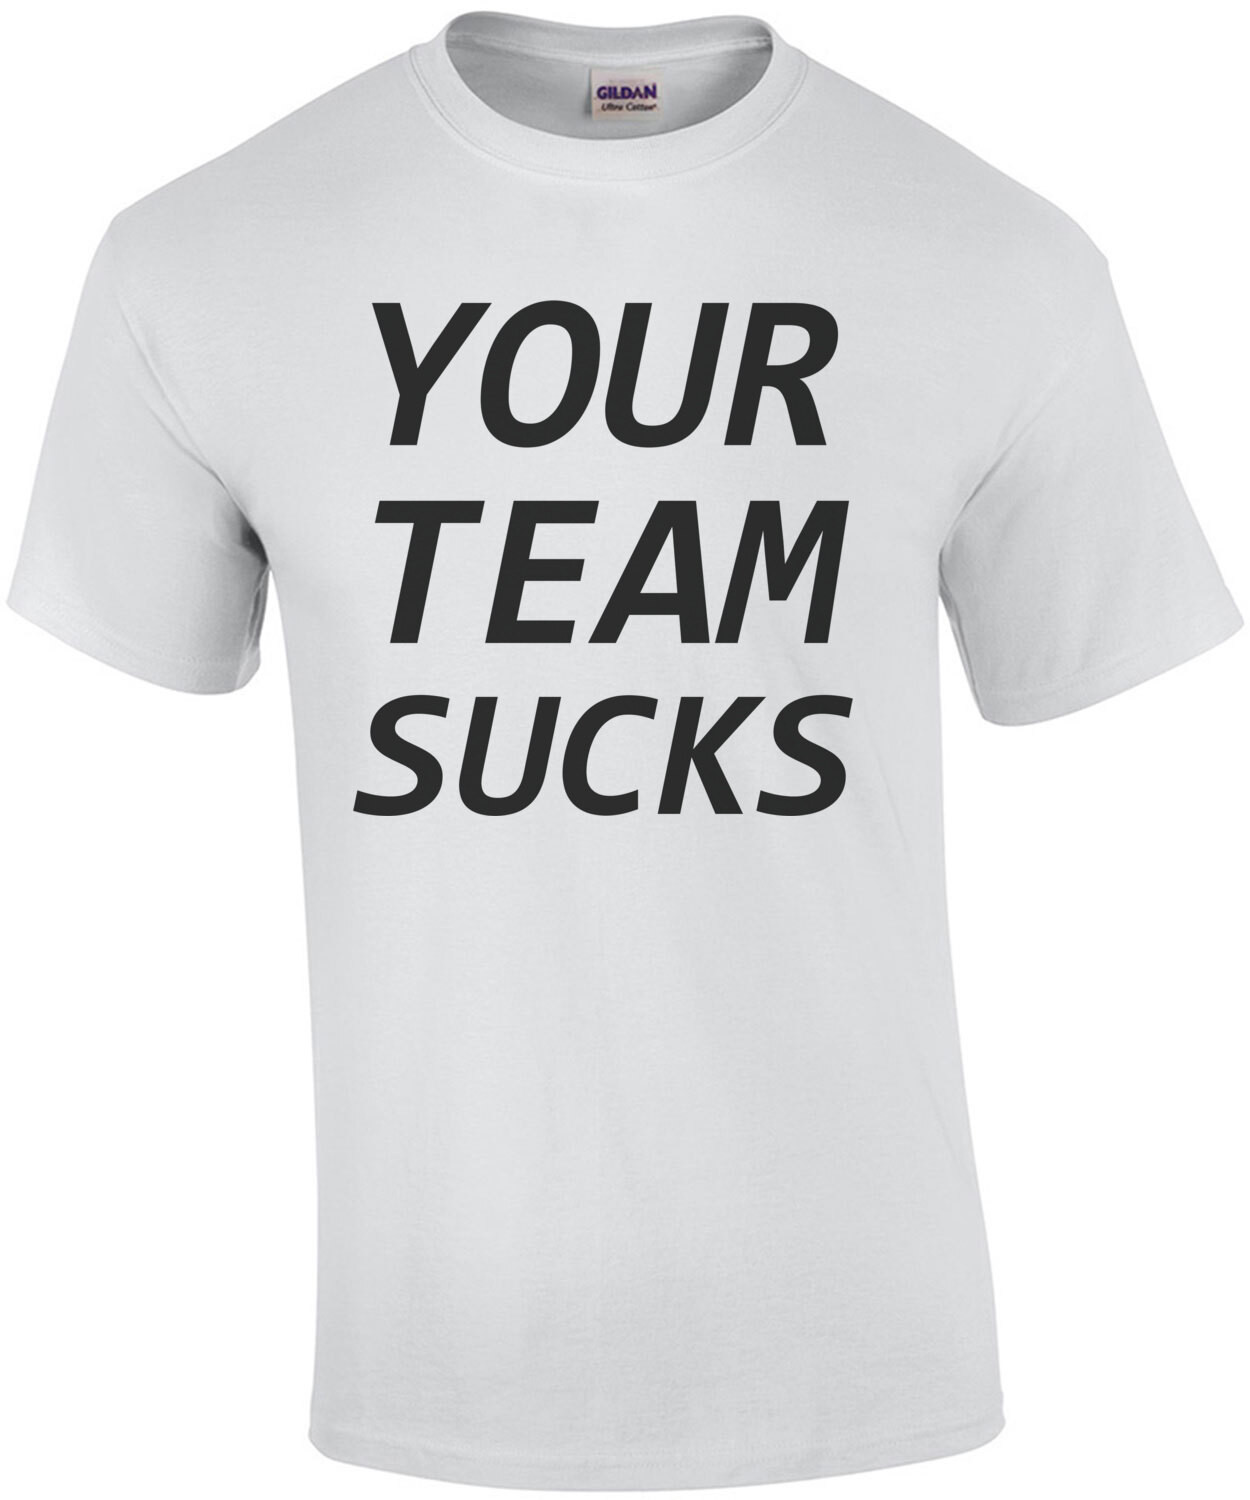 Your Team Sucks - Funny T-Shirt